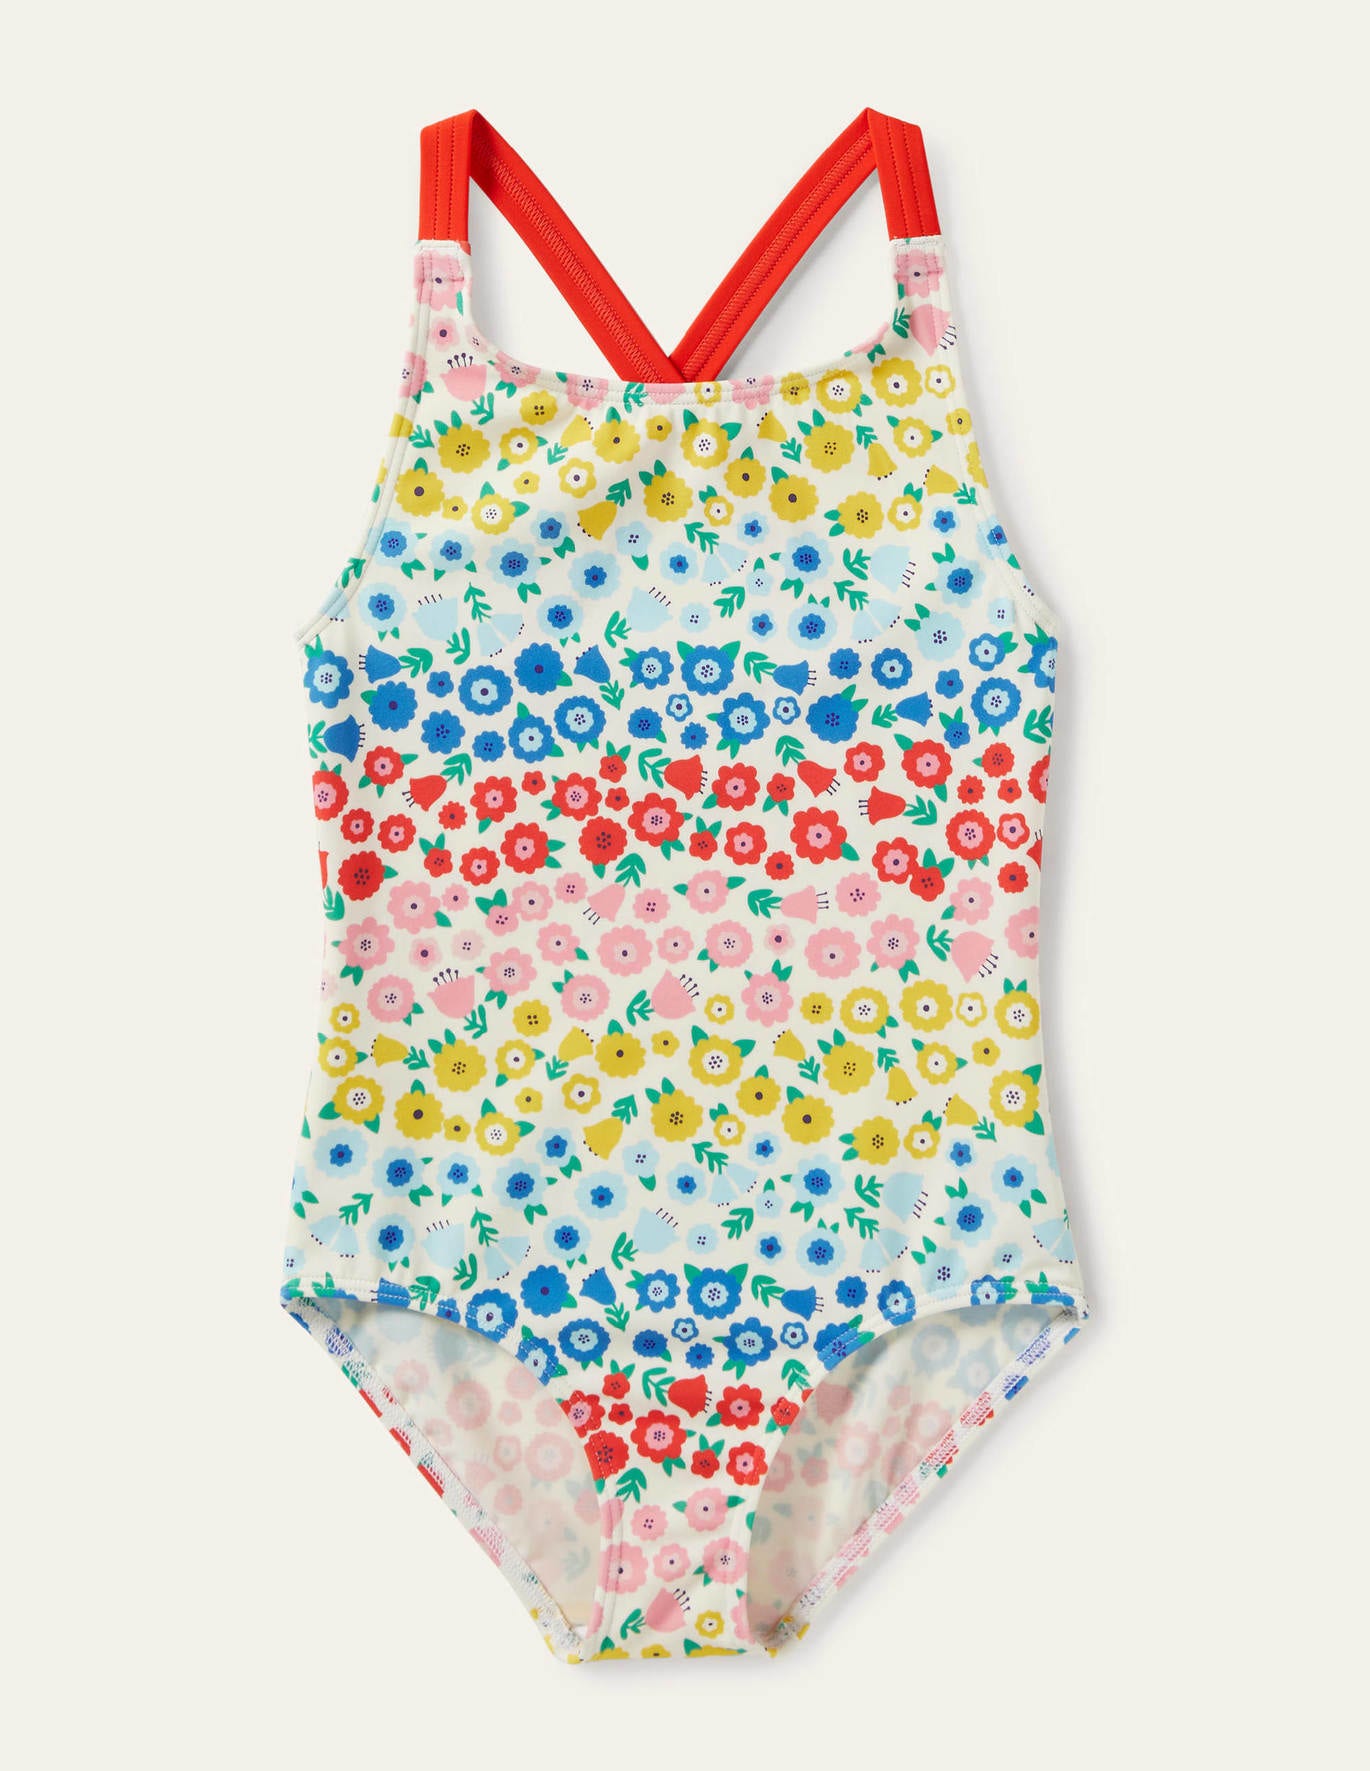 Boden Cross-back Printed Swimsuit - Multi Floral Stripe